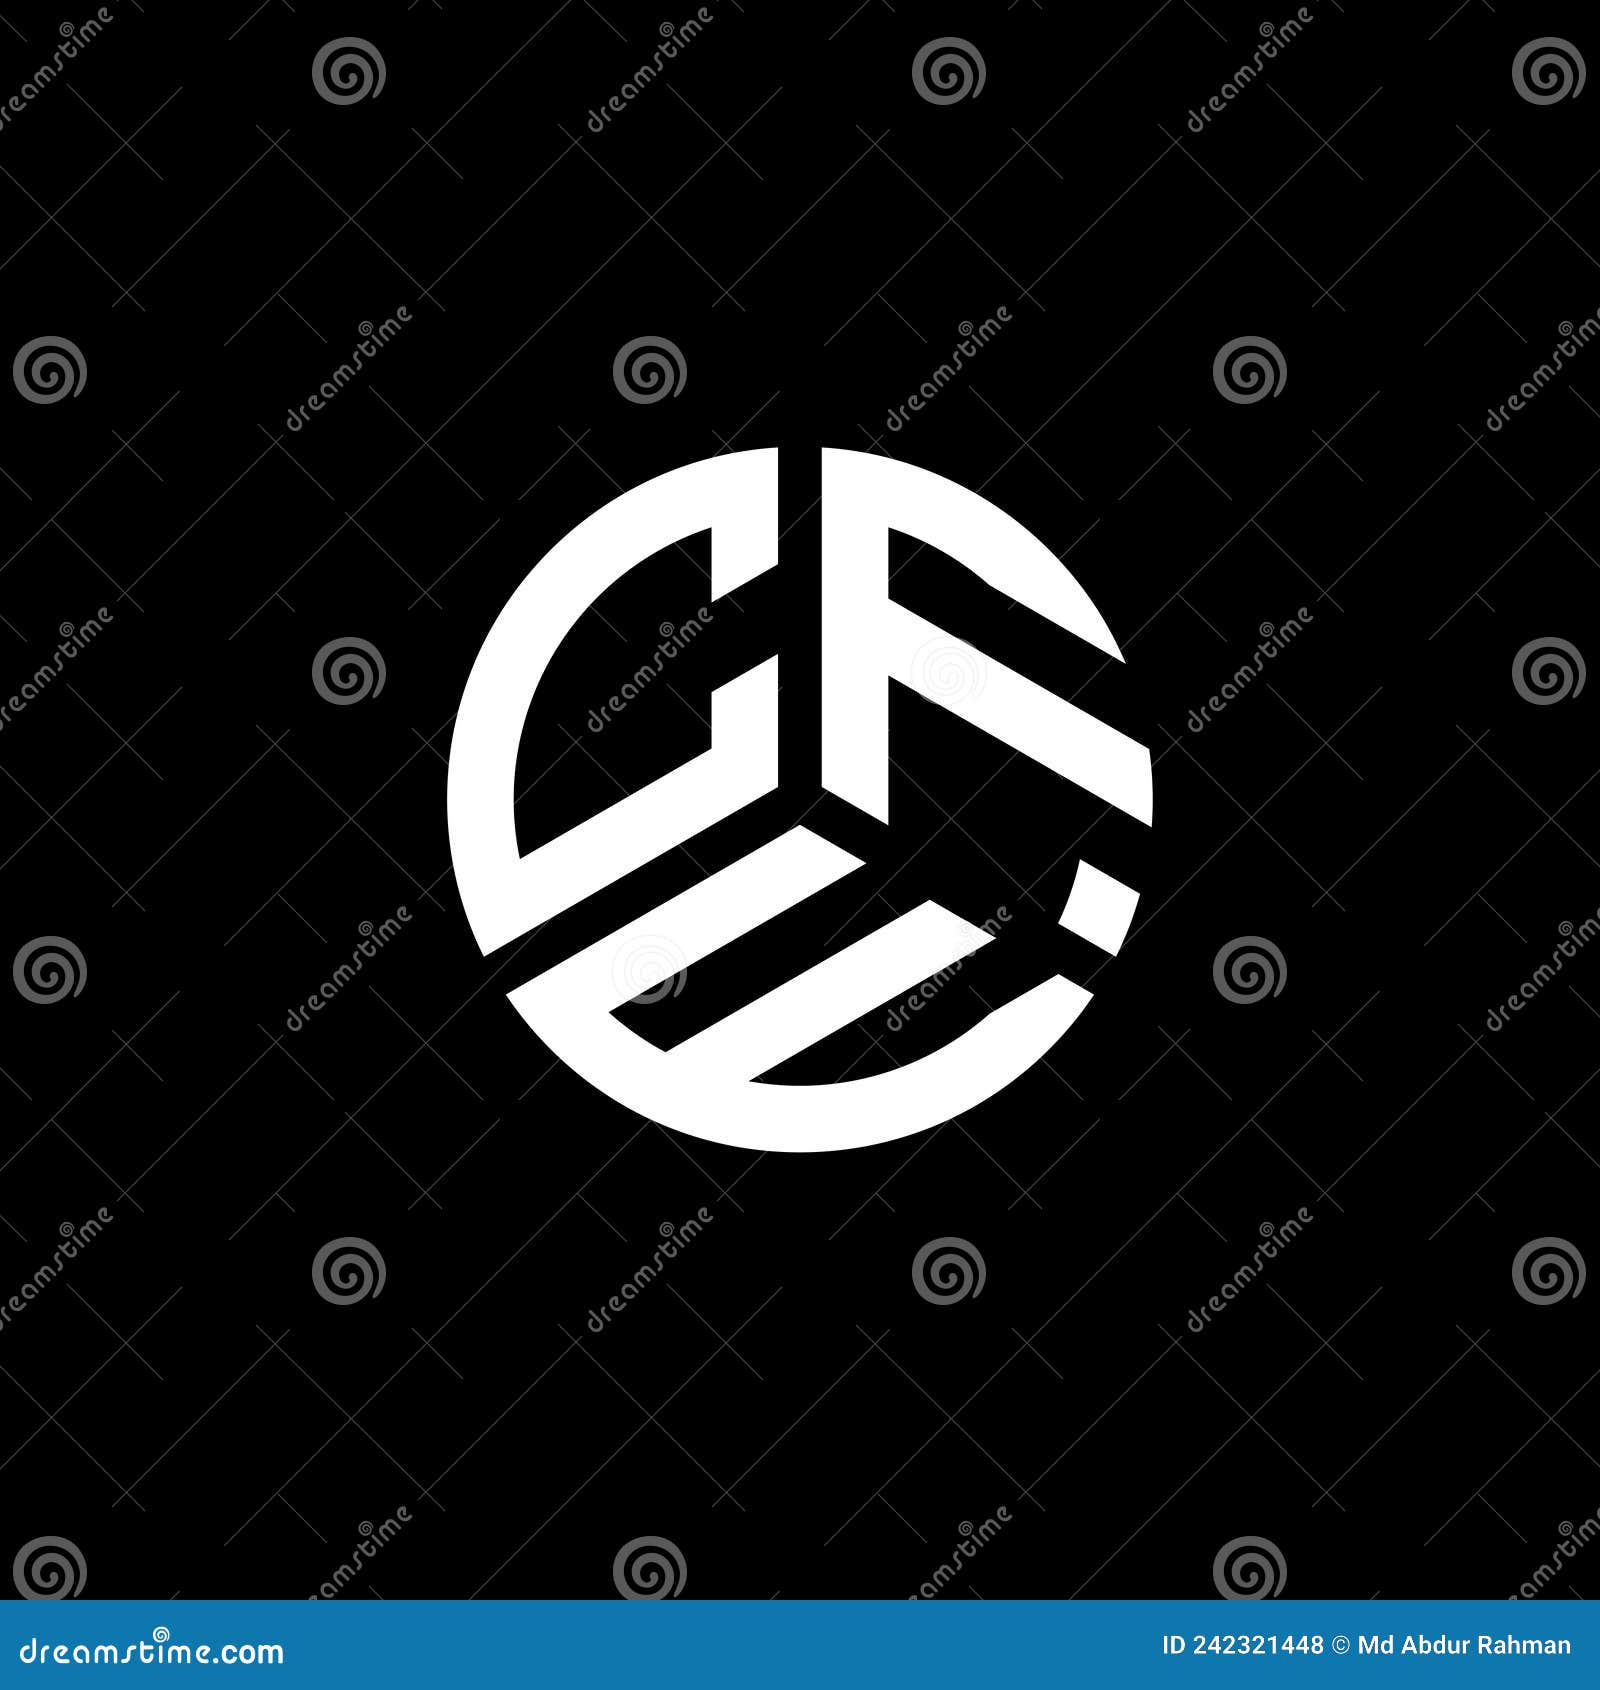 cfe letter logo  on white background. cfe creative initials letter logo concept. cfe letter 